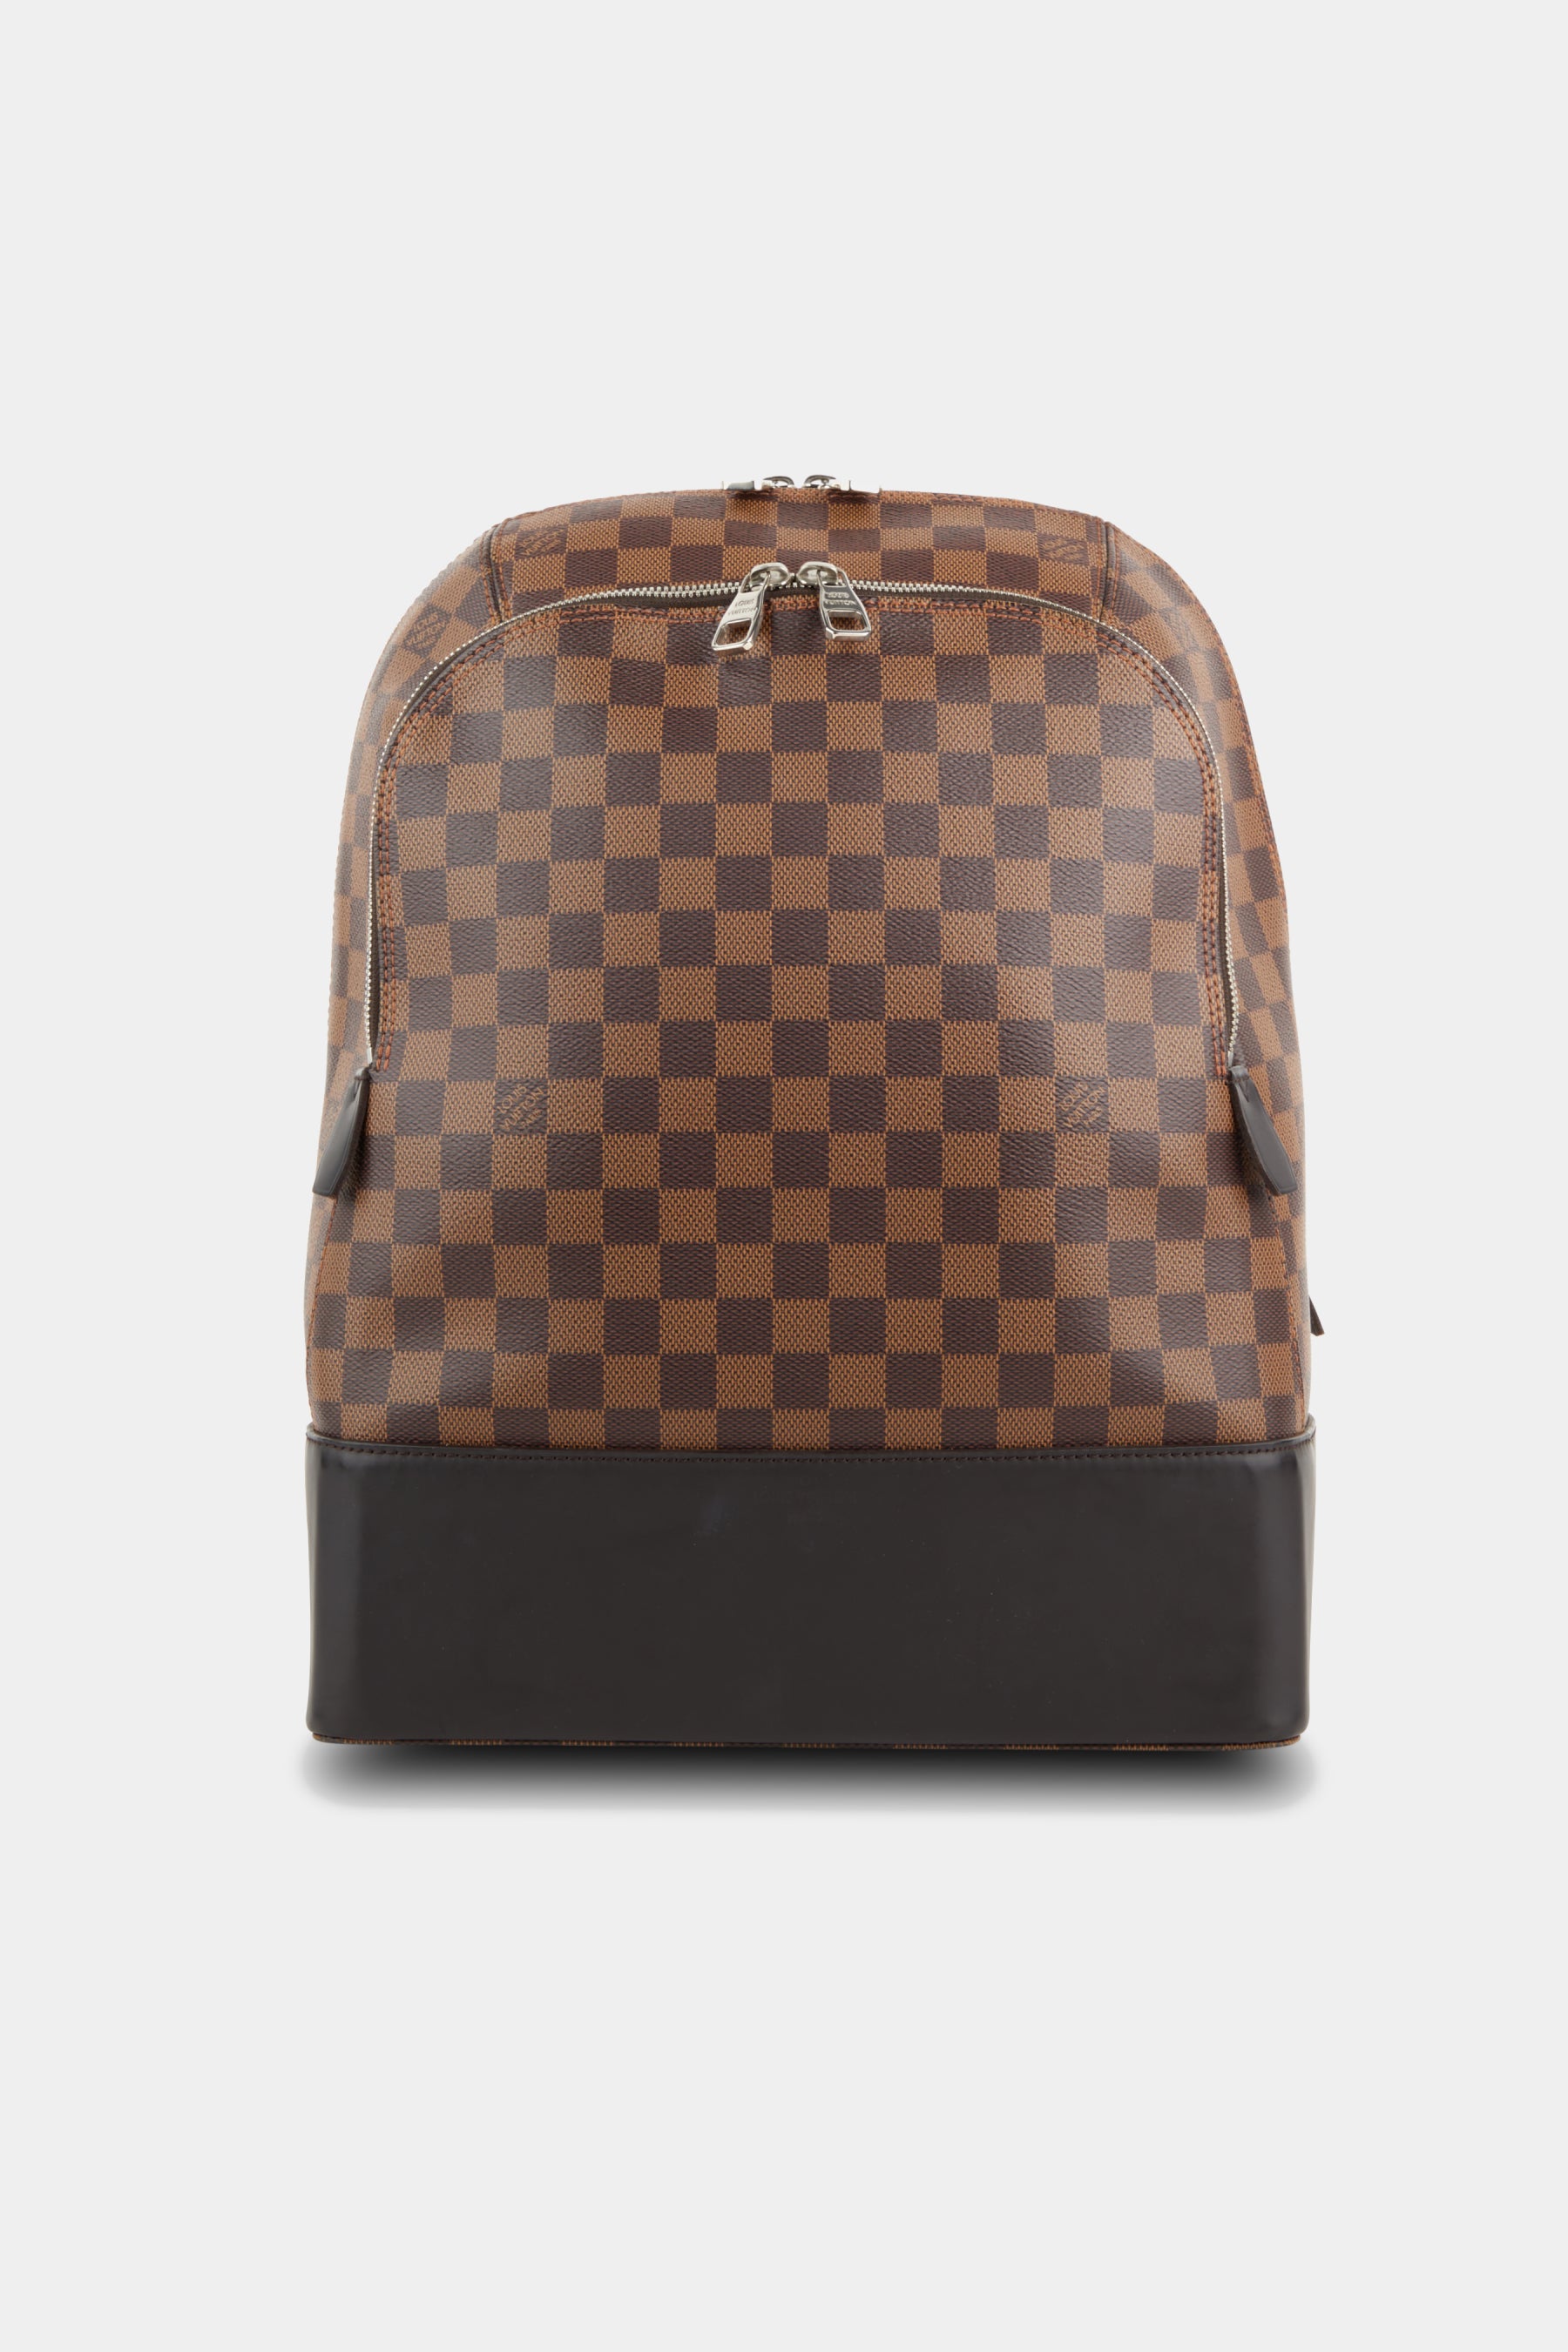 Louis Vuitton Damier Ebene Jake Backpack - Brown Backpacks, Bags